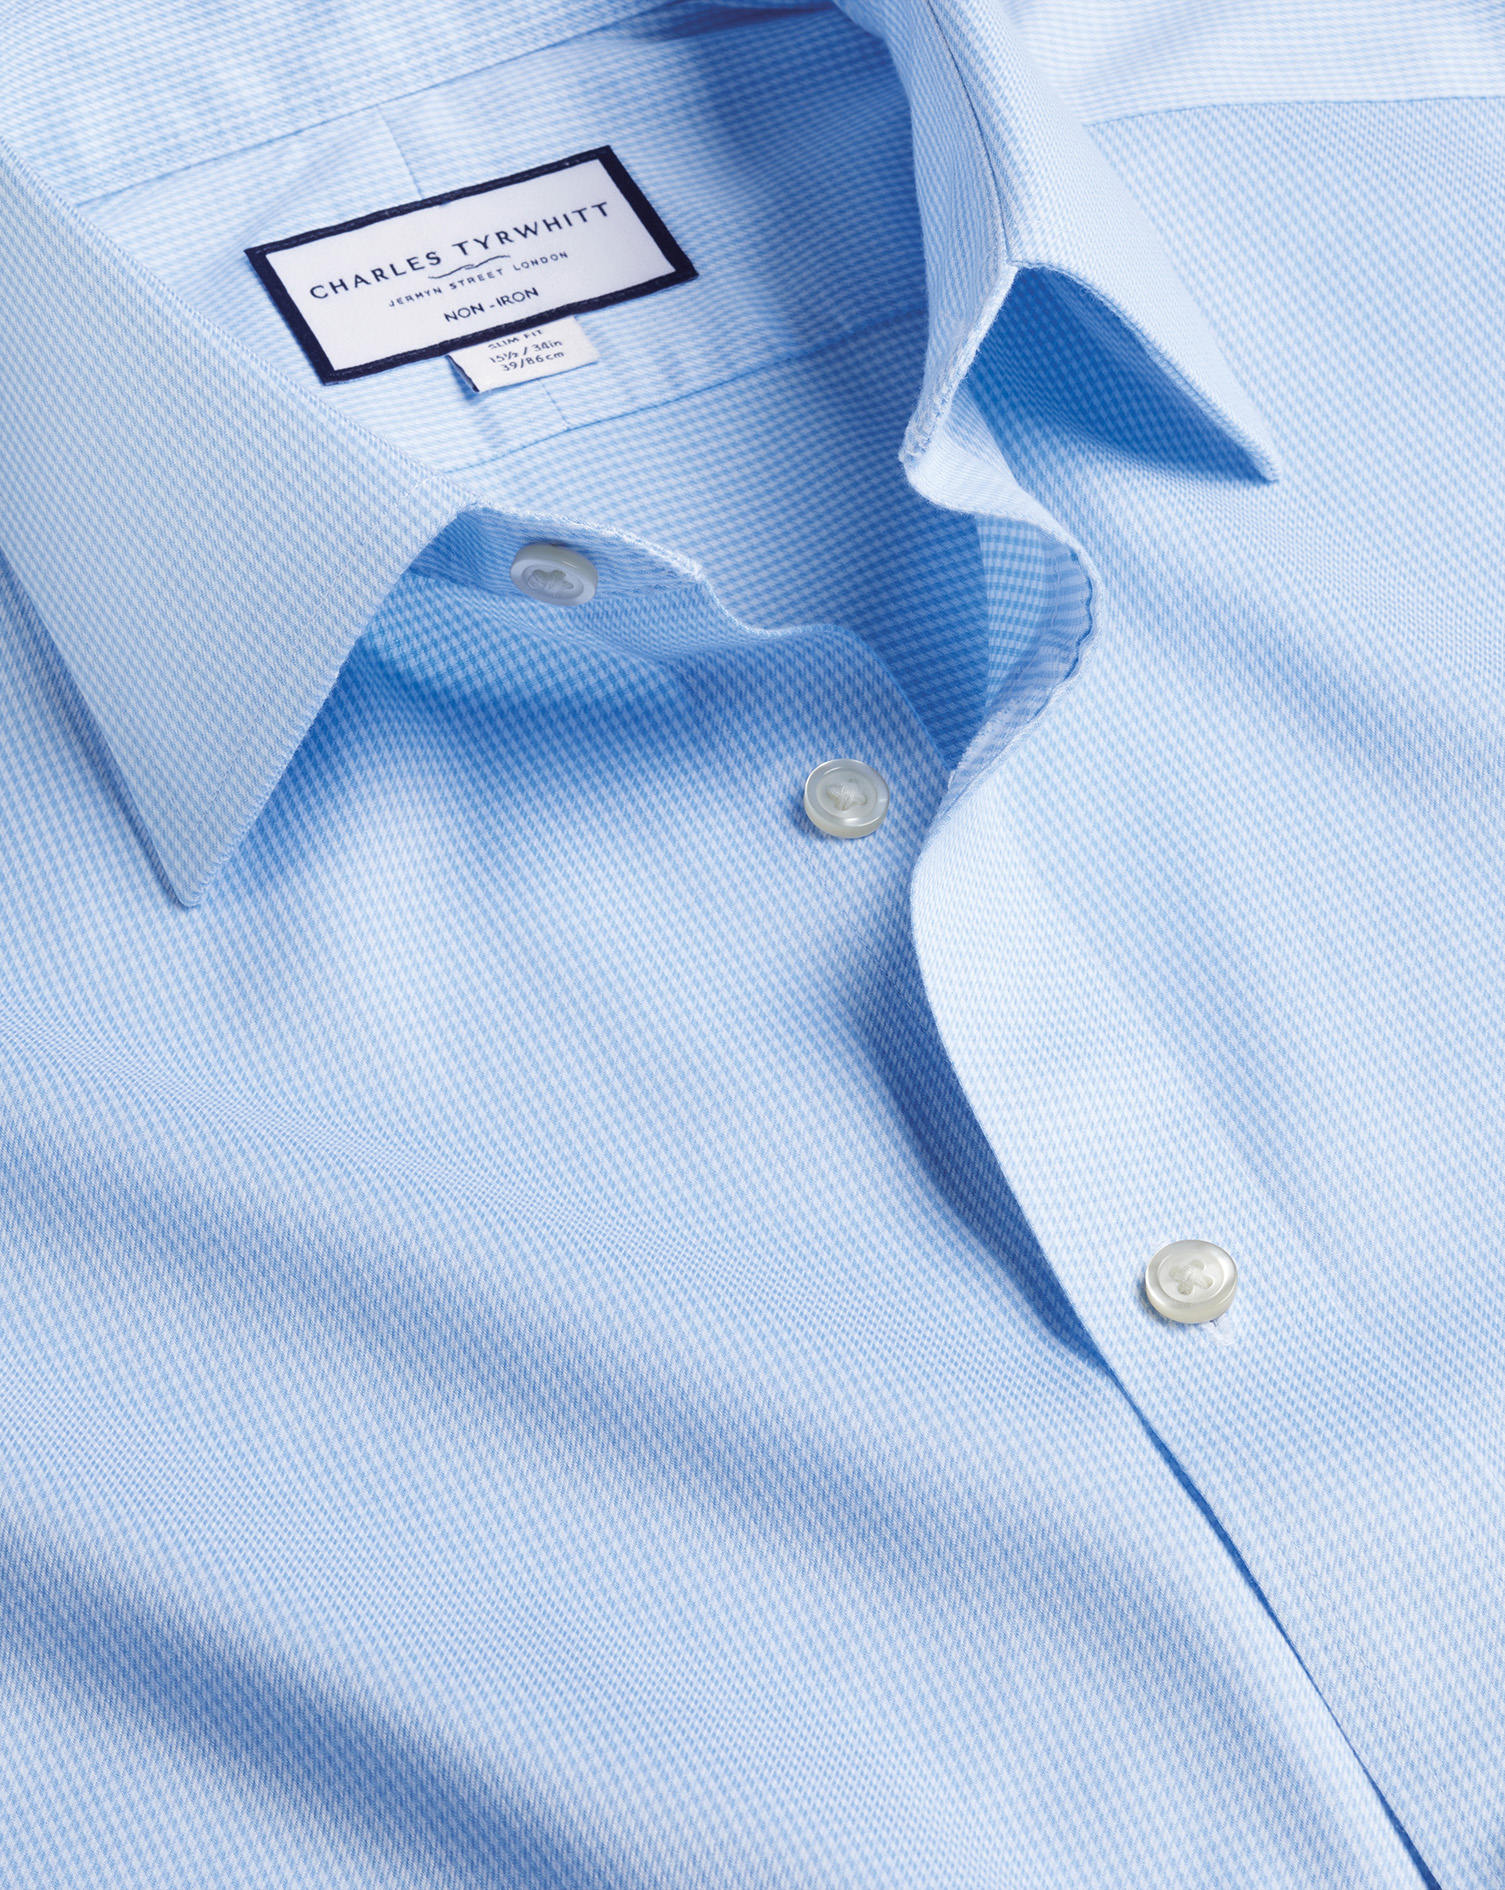 Men's Charles Tyrwhitt Non-Iron Puppytooth Dress Shirt - Sky Blue French Cuff Size XXL Cotton
